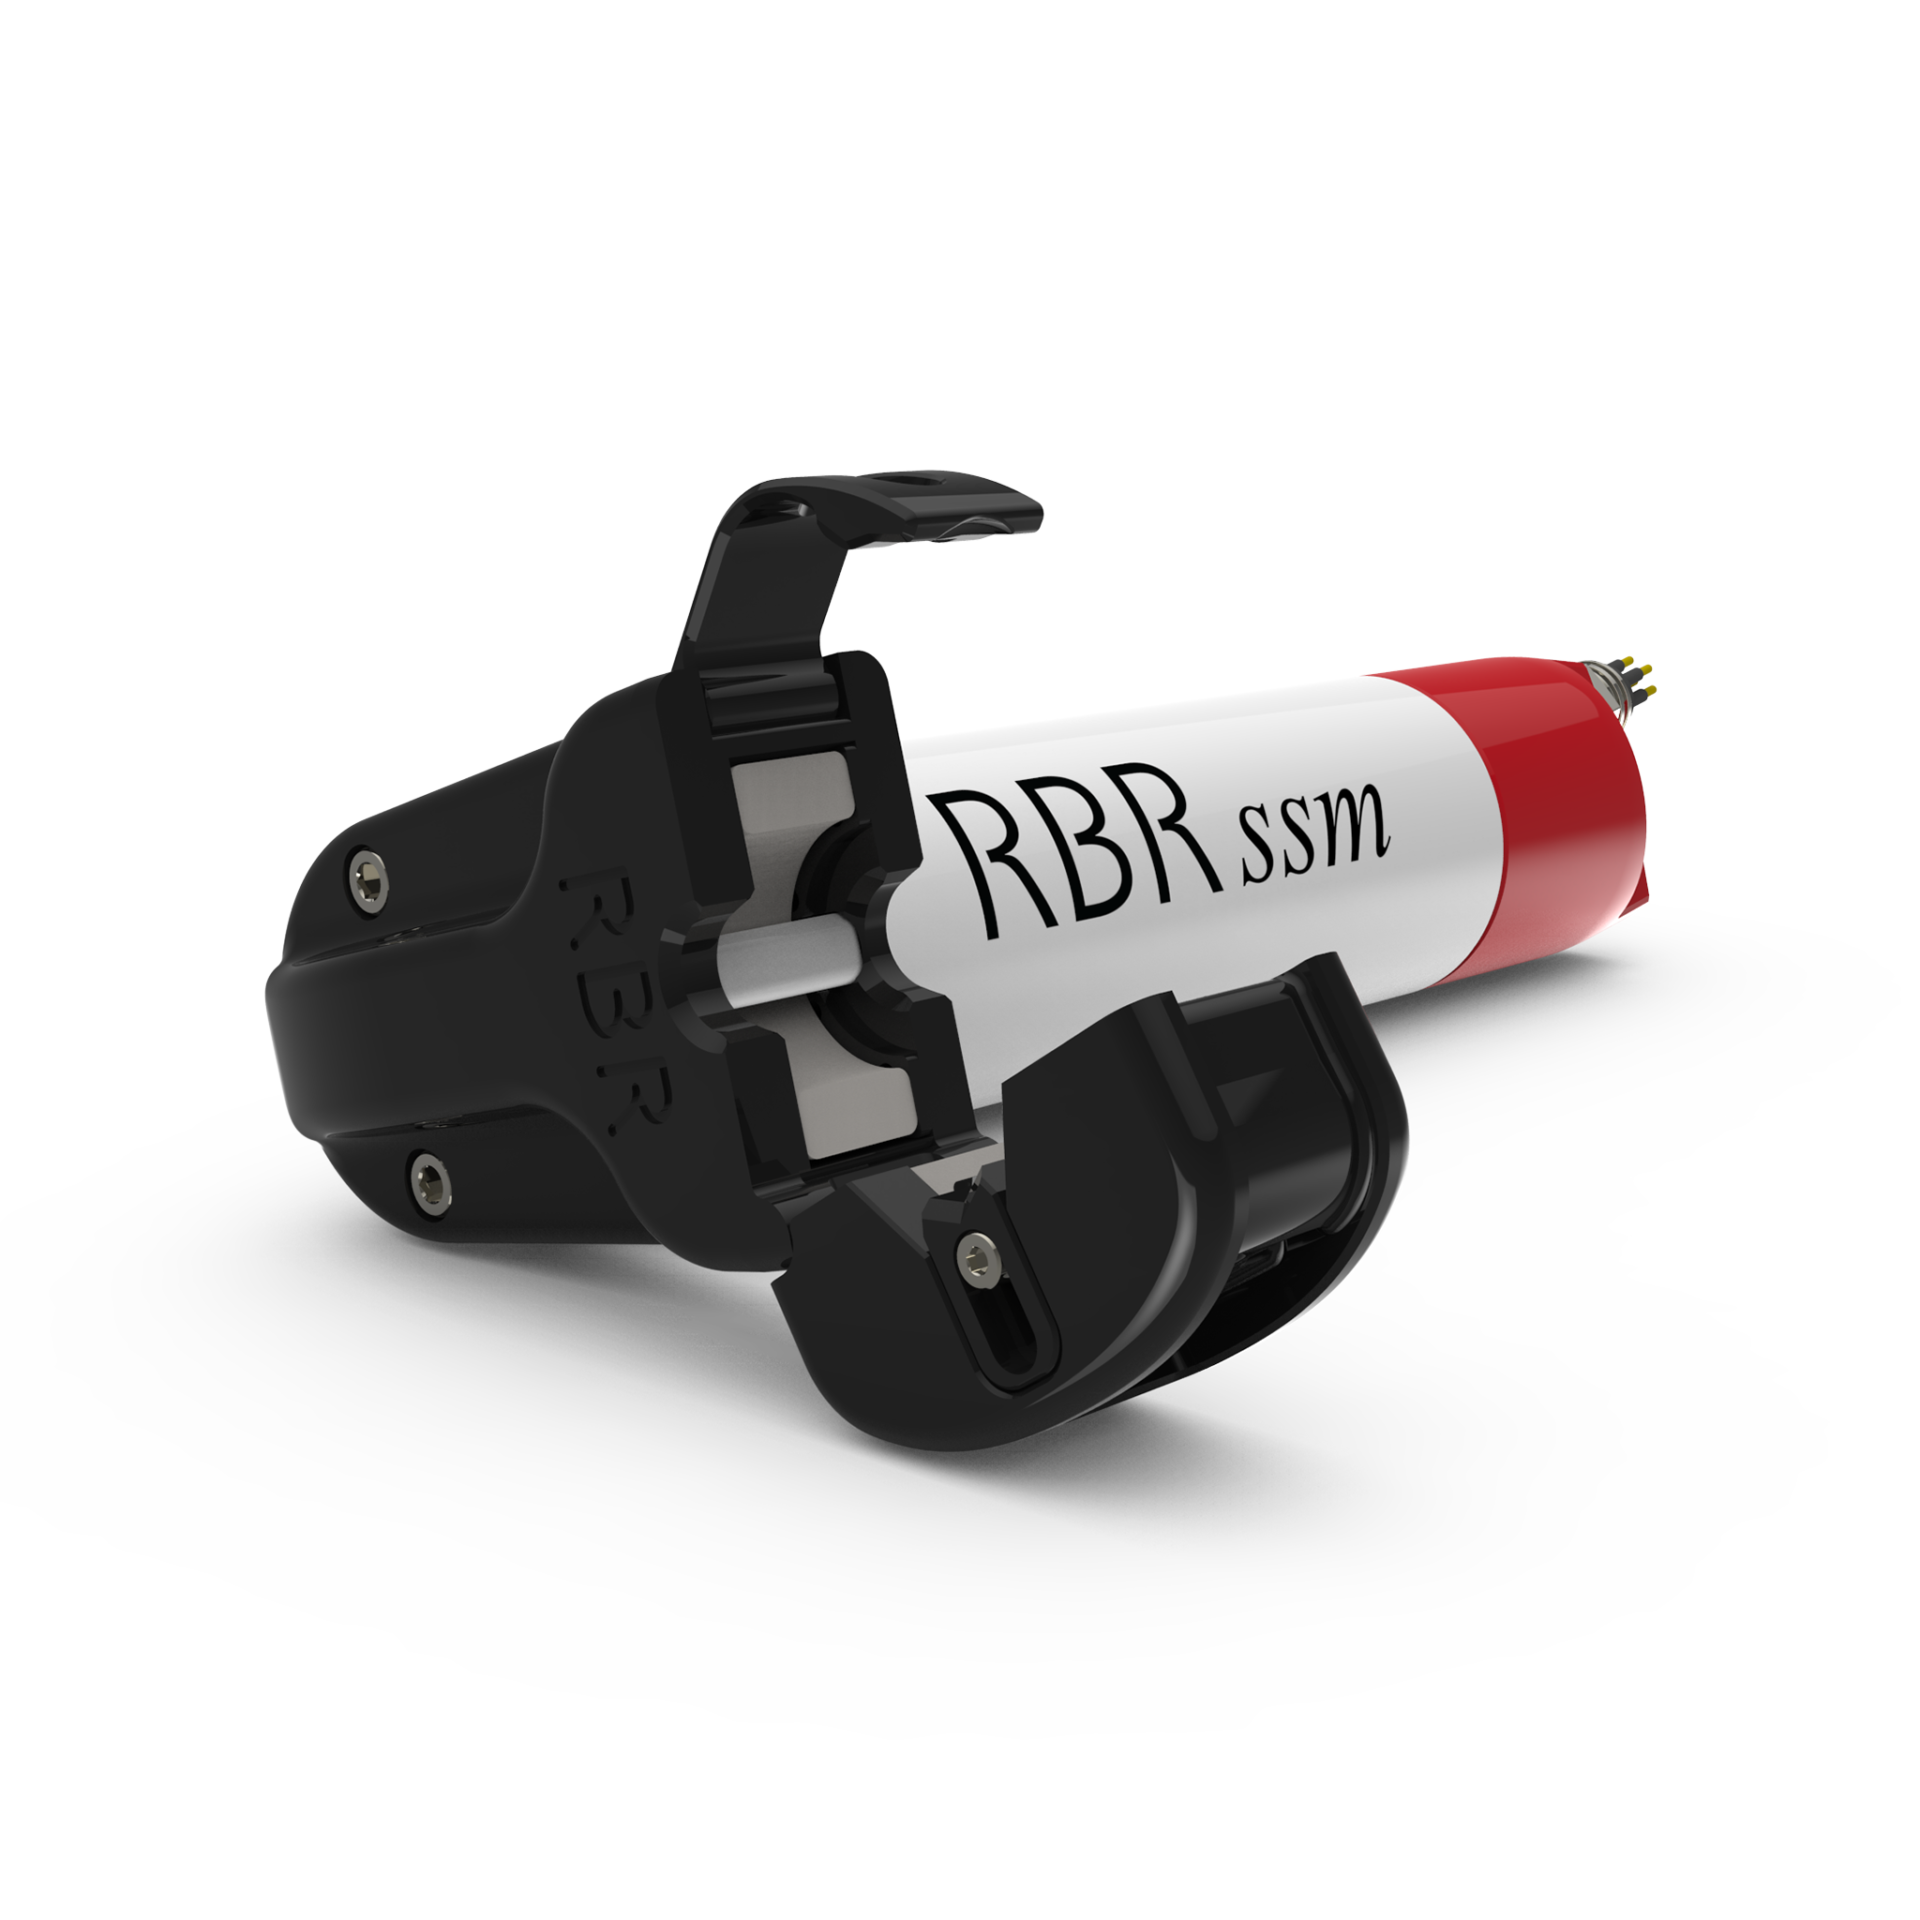 RBR inductive modem communication system